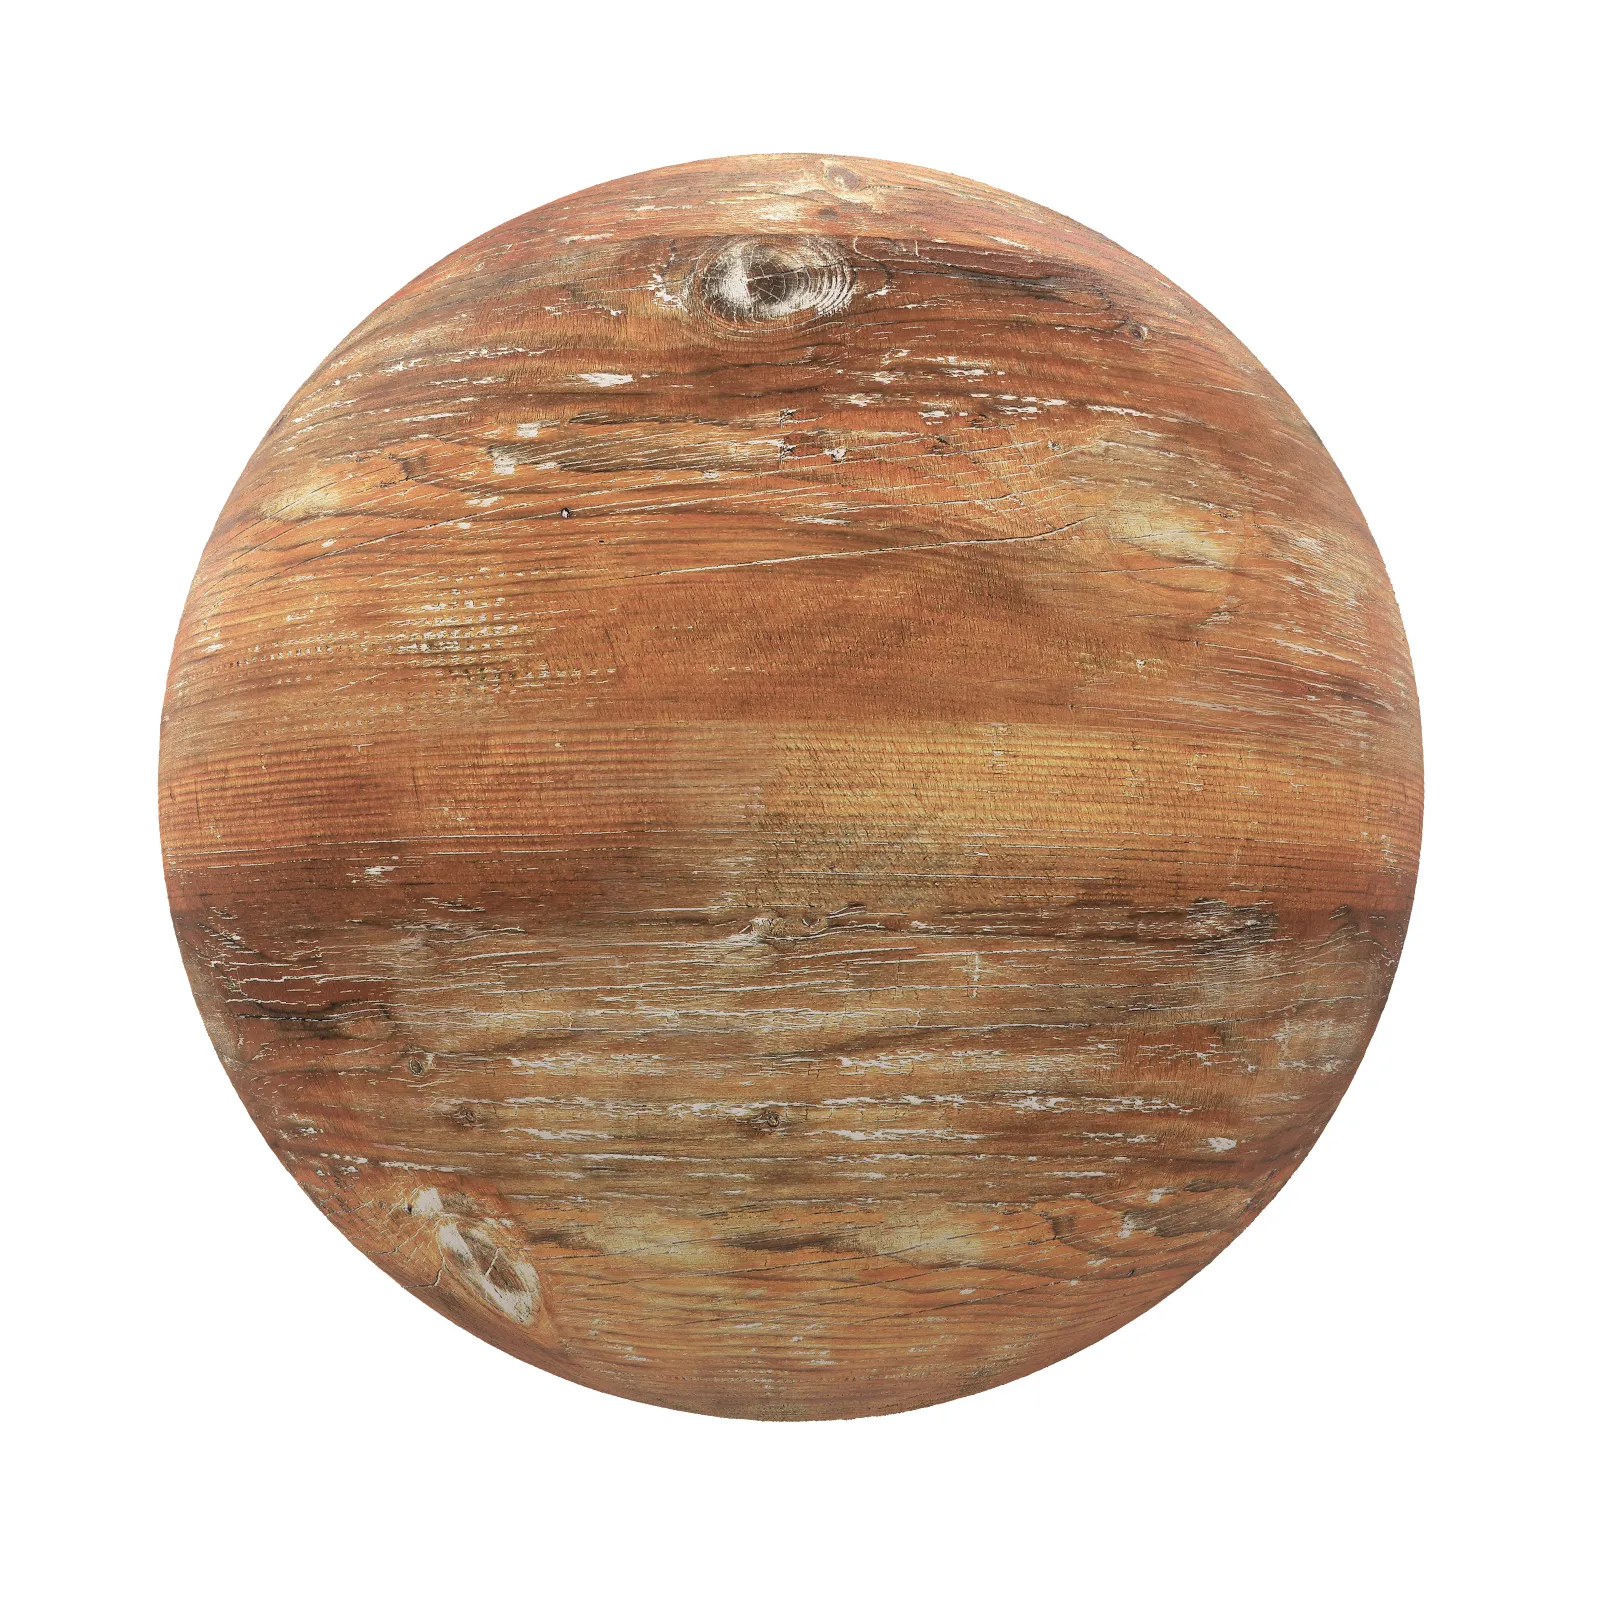 3ds Max Files – Texture – 8 – Wood Texture – 105 – Wood Texture by Minh Nguyen